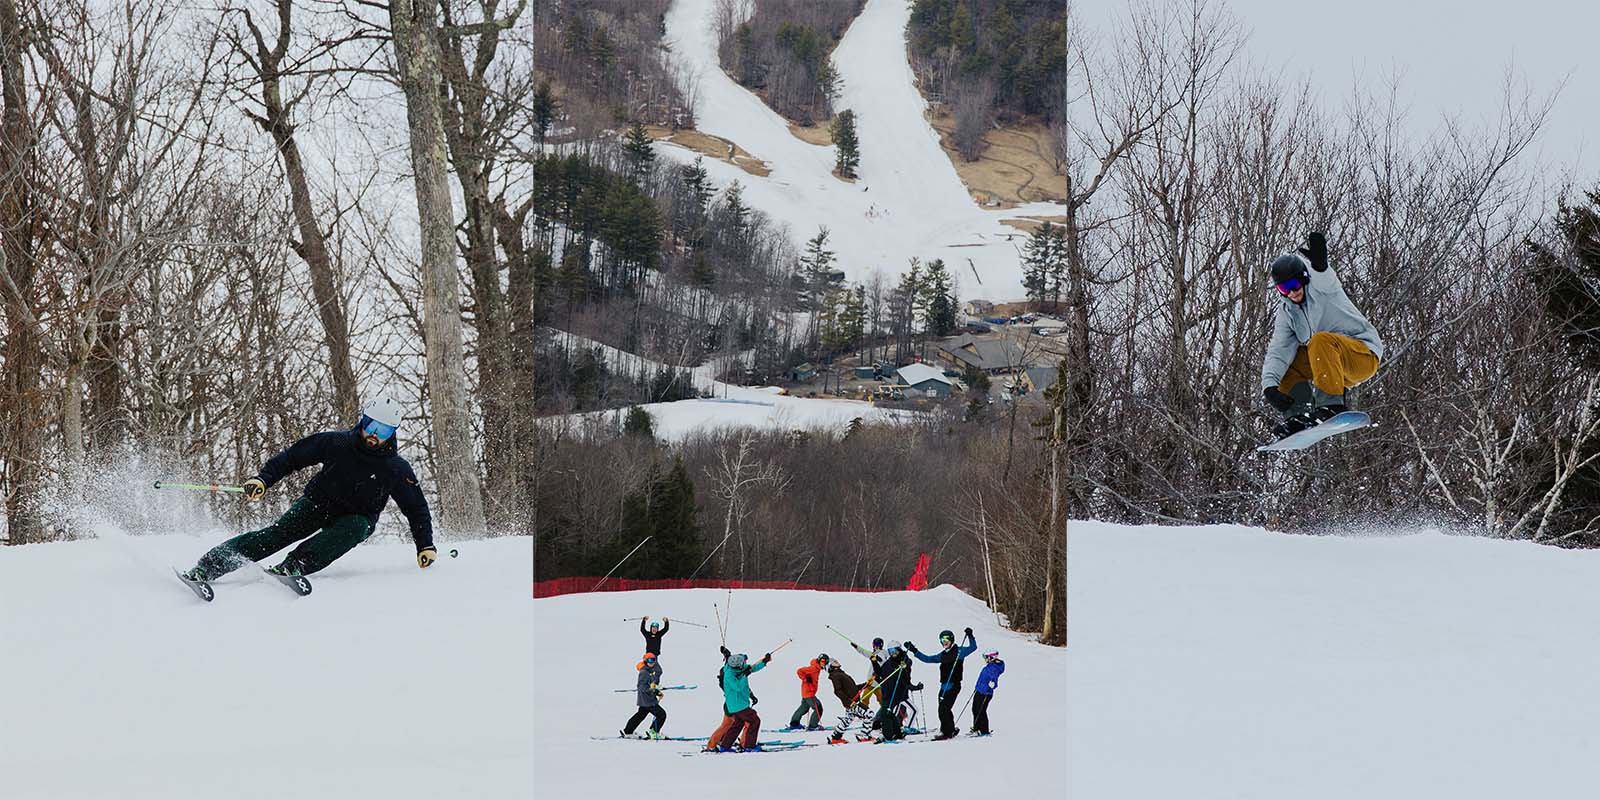 The Ski Monster, ski, TSM, winter, Volkl, Sunapee, New Hampshire, skiing, snow